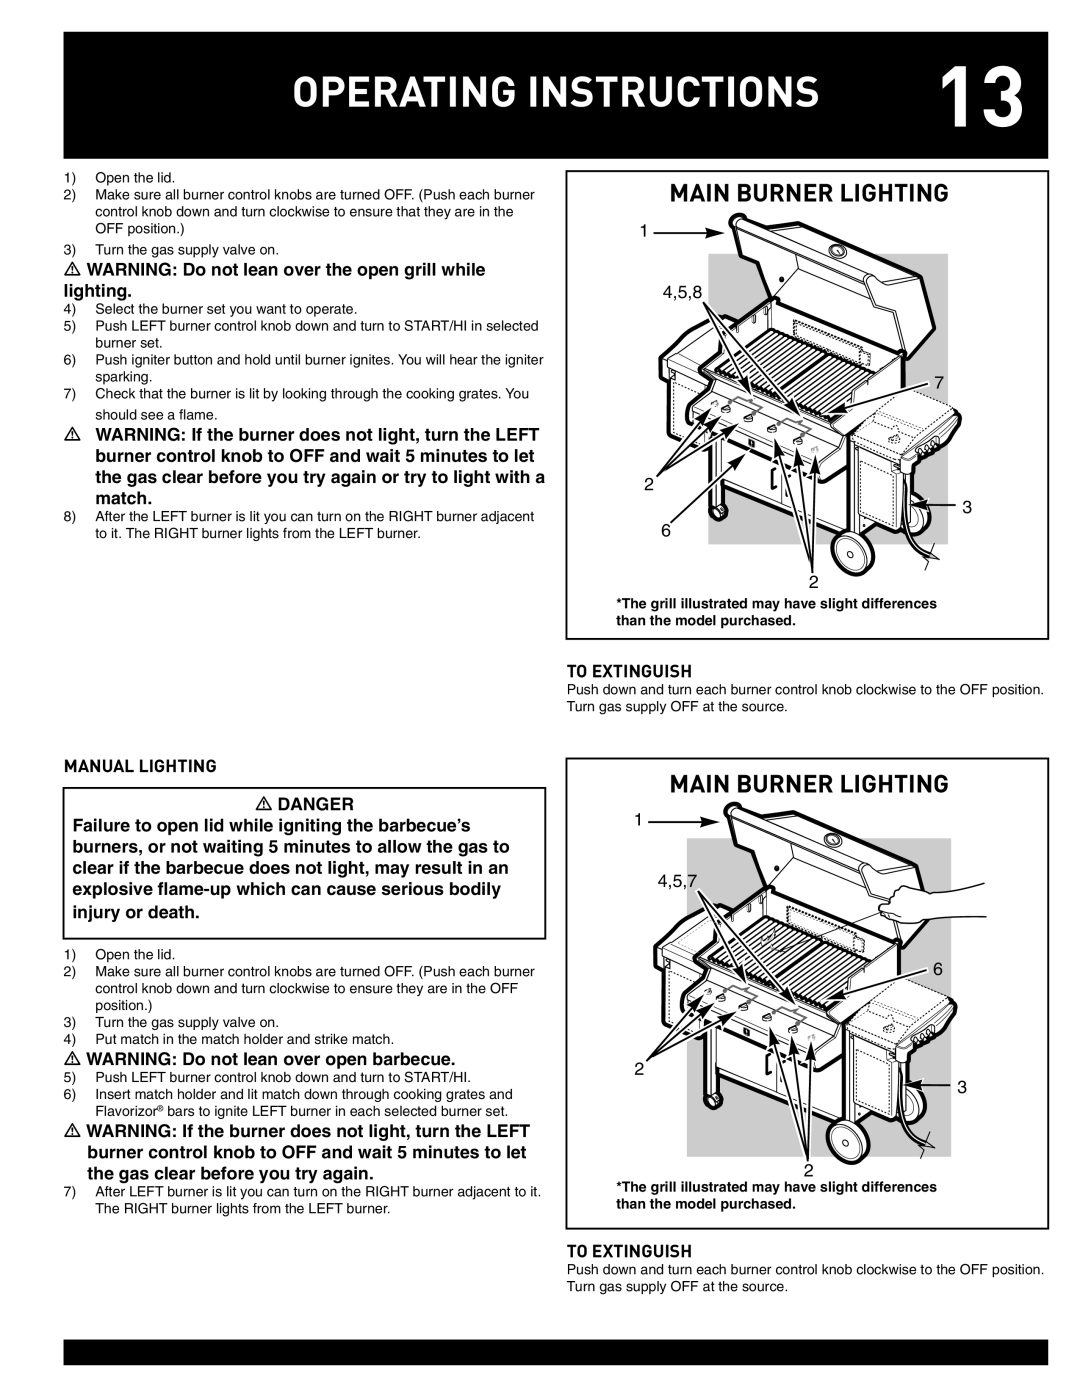 Weber 38044 manual Operating Instructions, Main Burner Lighting, 4,5,8, Manual Lighting, To Extinguish, 4,5,7 